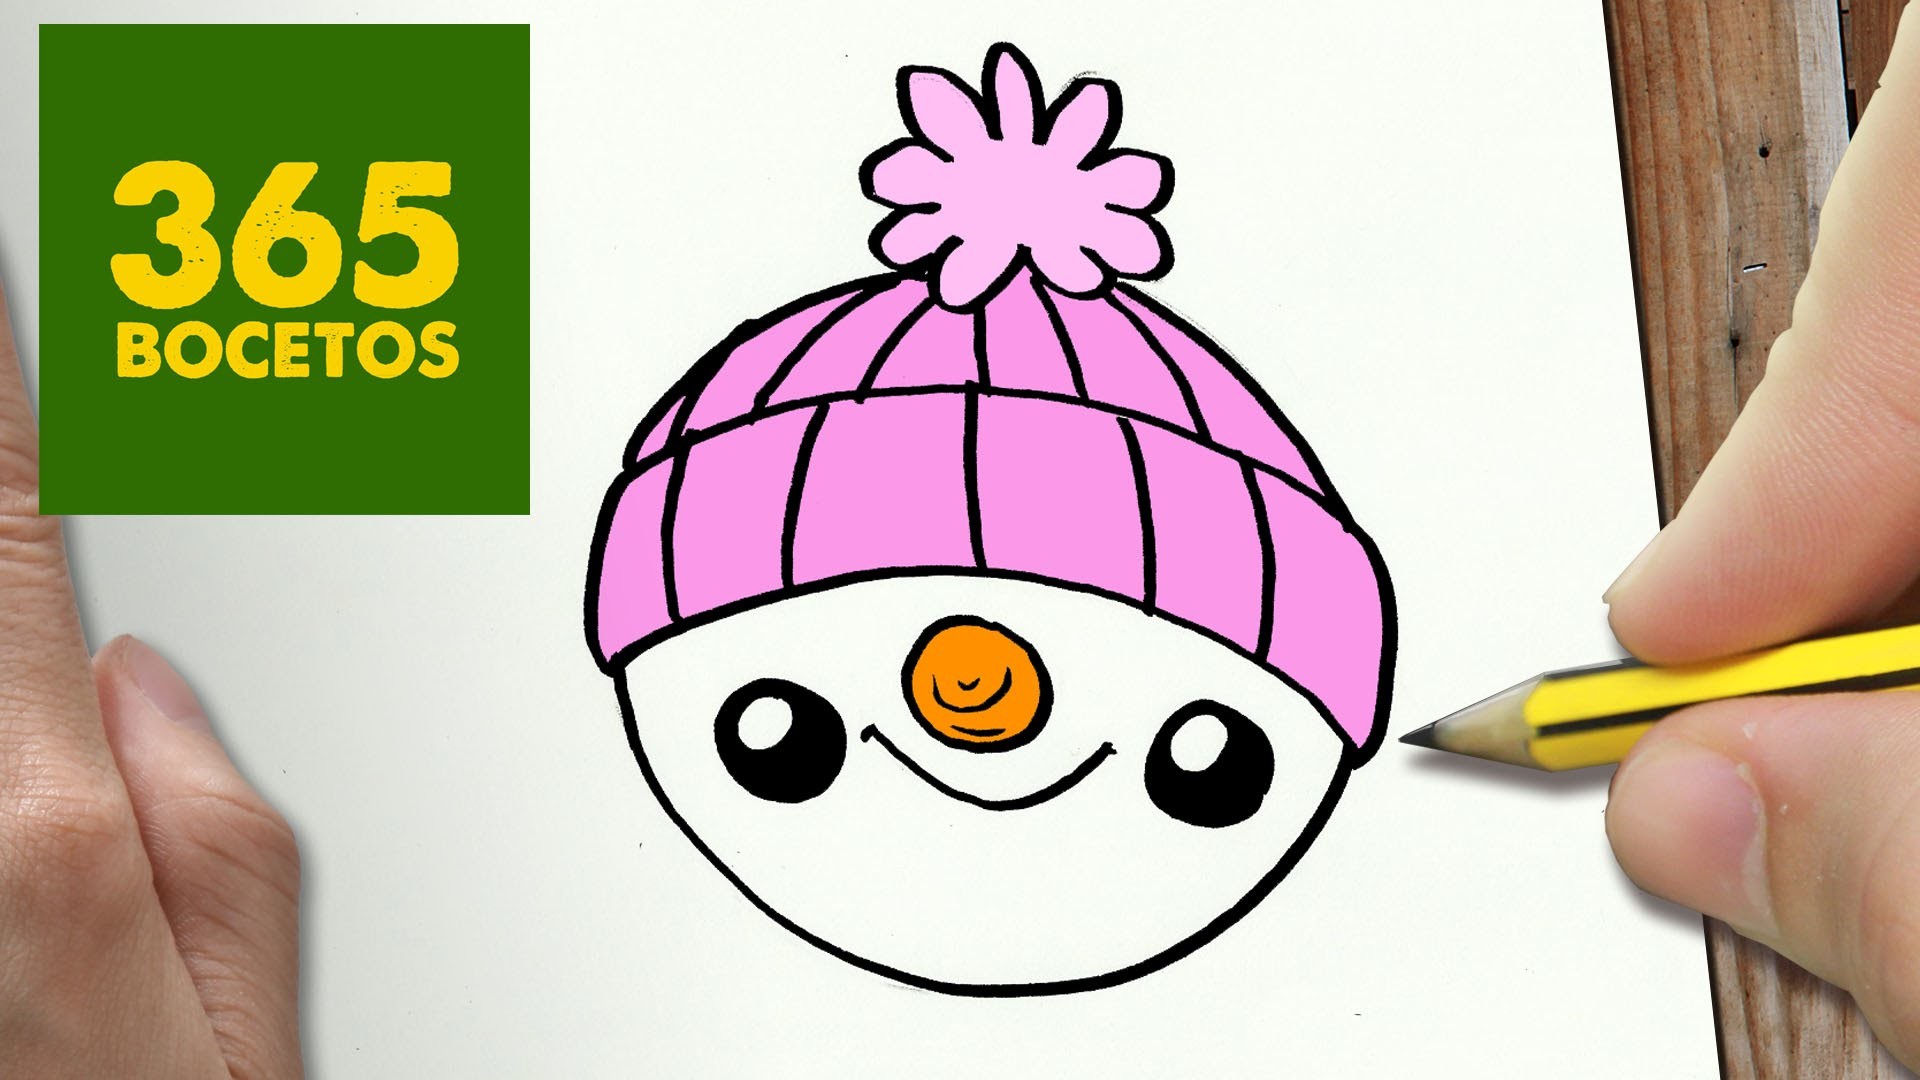 COMO DIBUJAR UN MUÑECO DE NIEVE PARA NAVIDAD PASO A PASO: Dibujos kawaii navideños -  draw a snowman